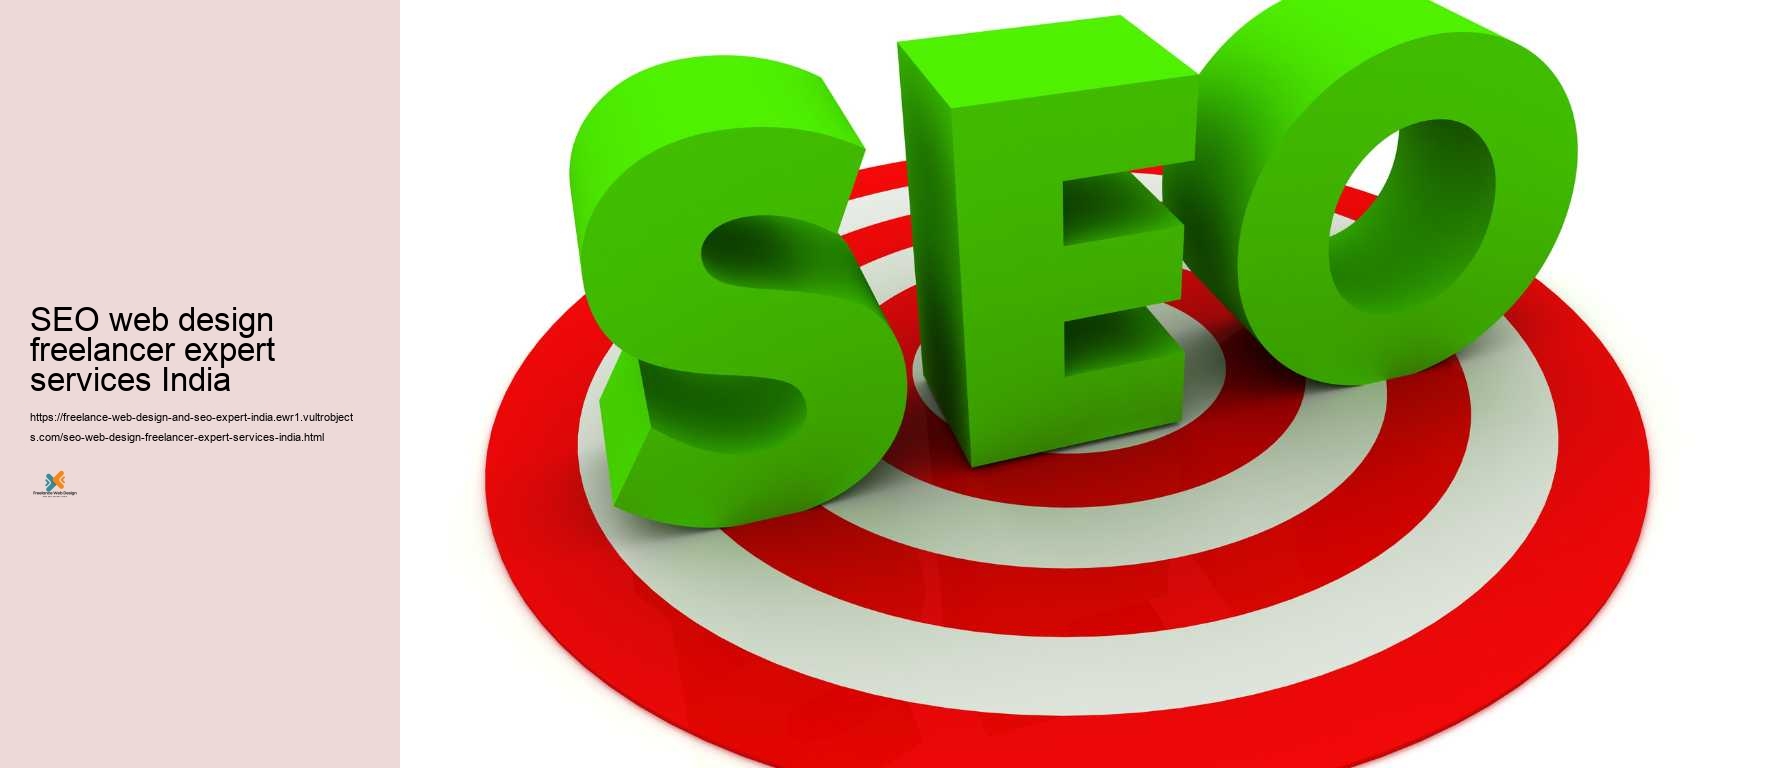 SEO web design freelancer expert services India